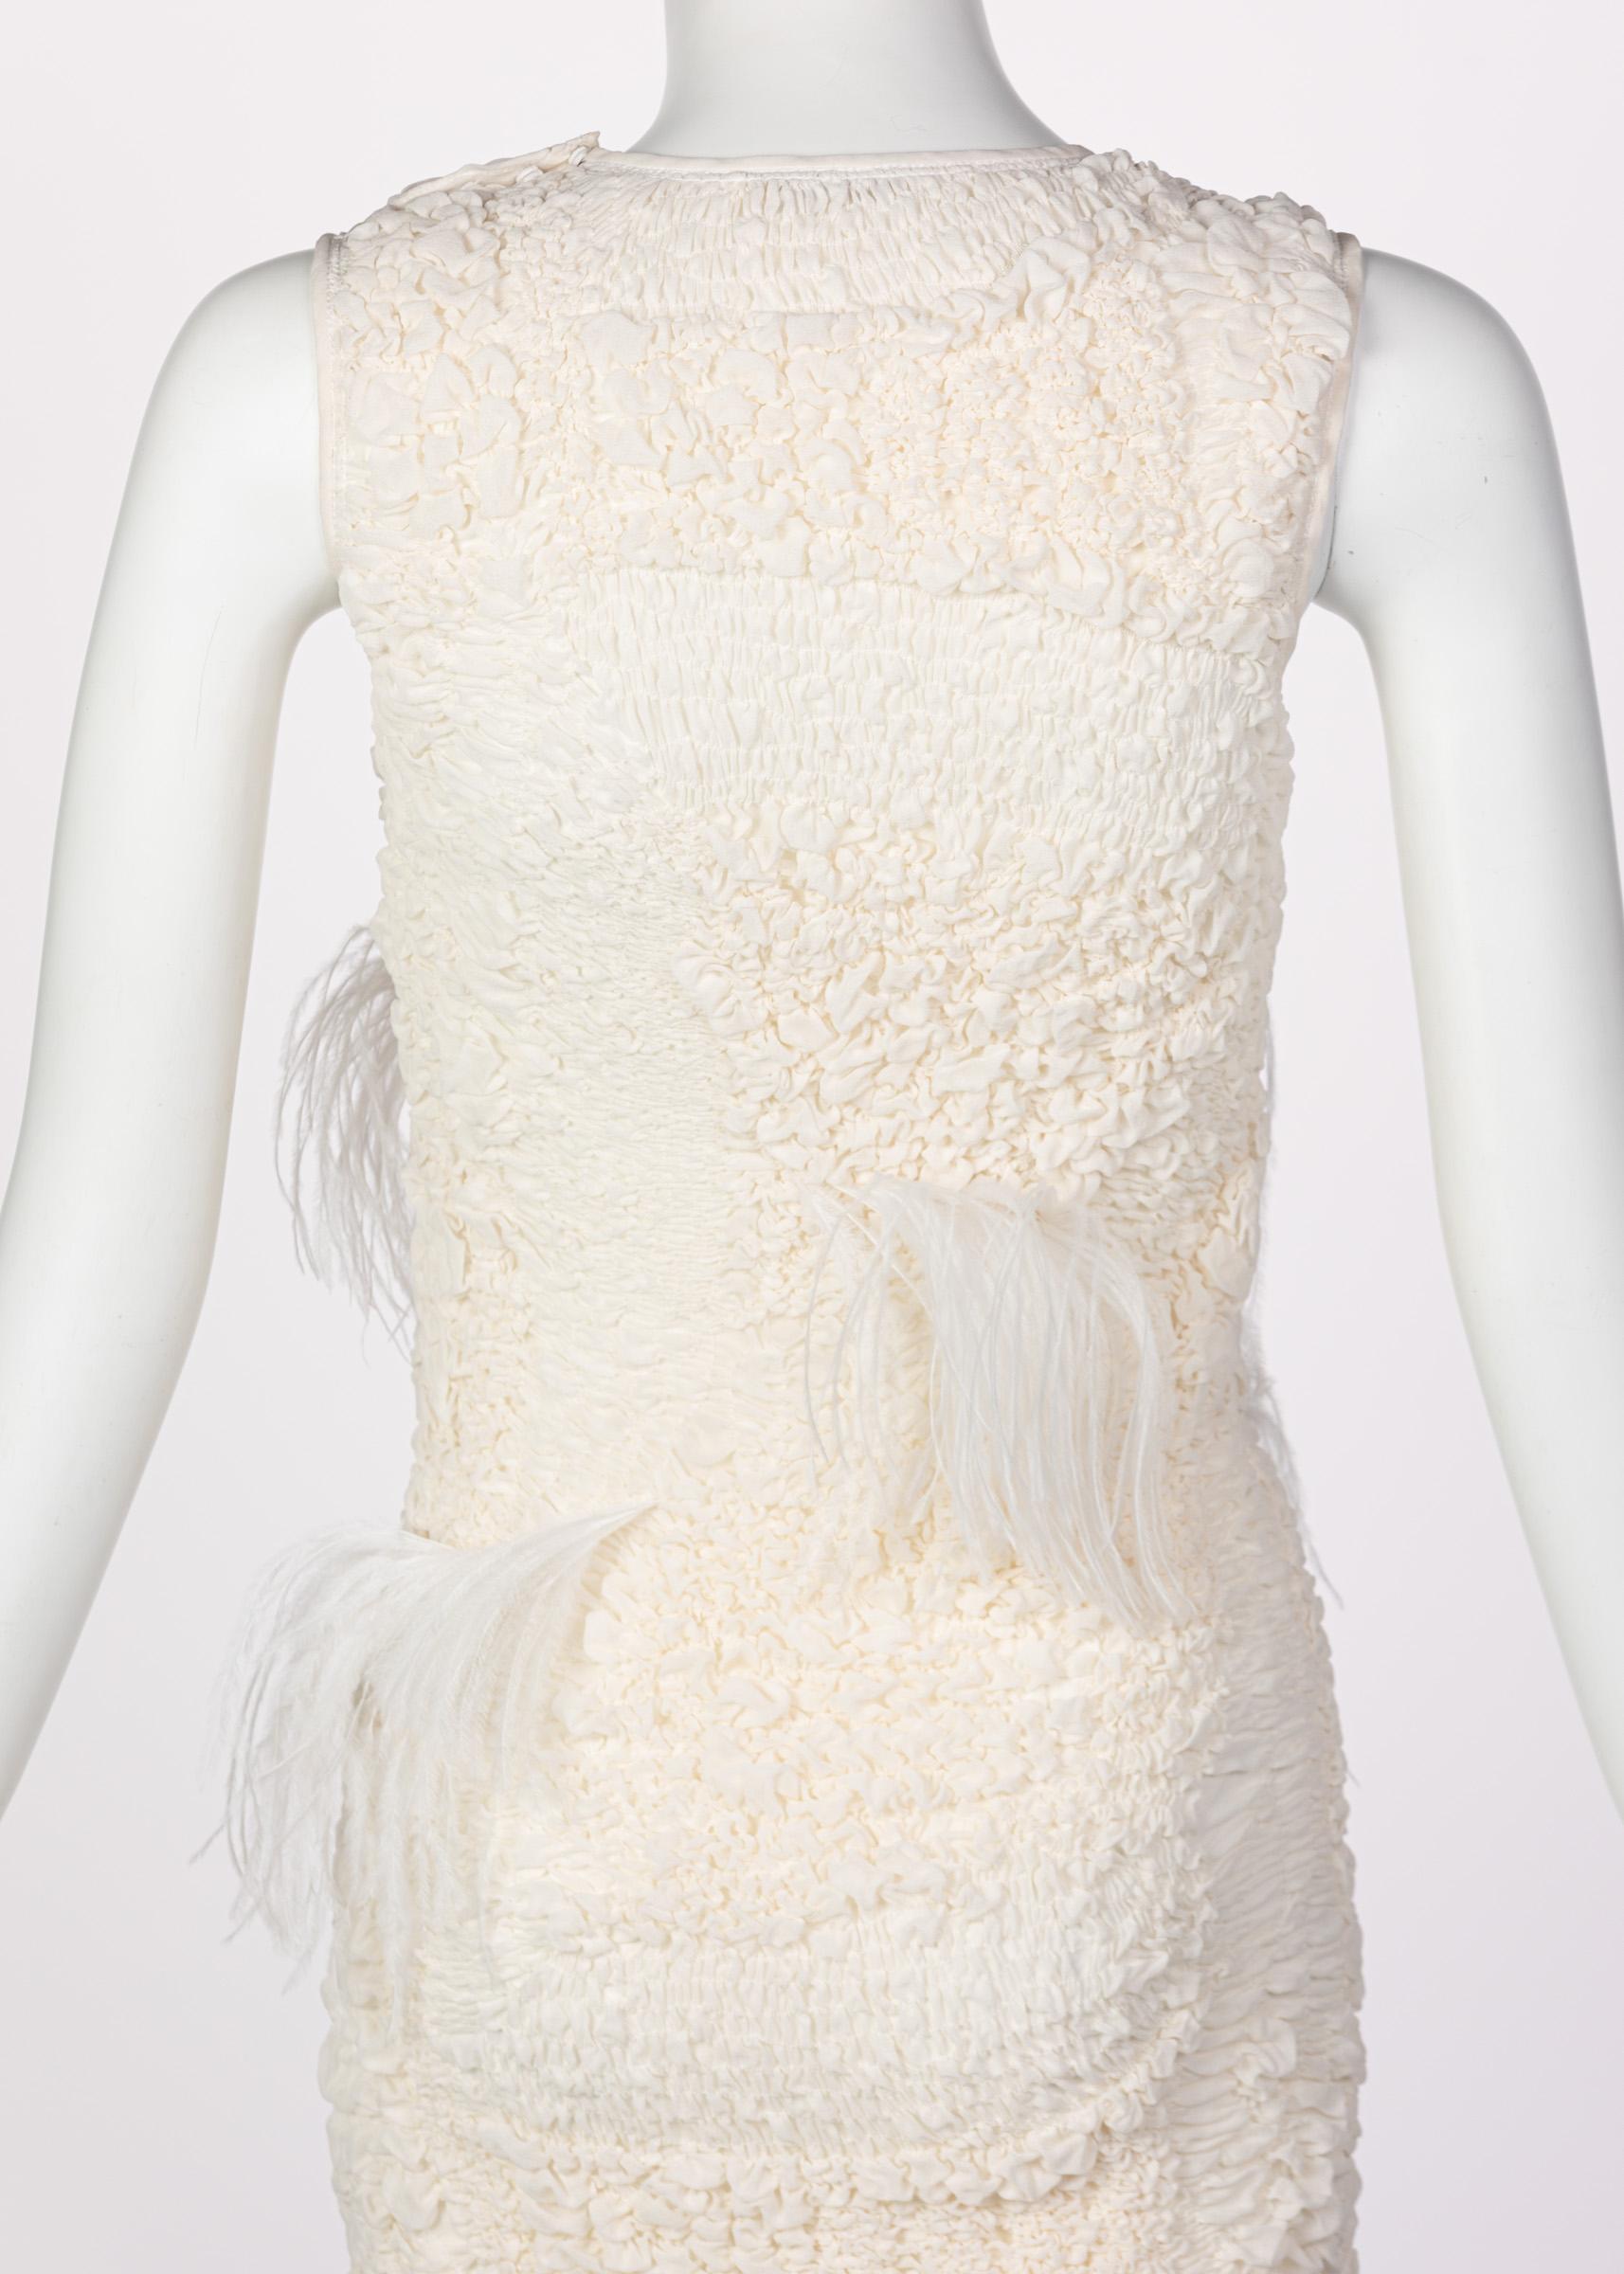 Women's Nina Ricci Ivory Silk Feather Embellished Dress, Spring 2016